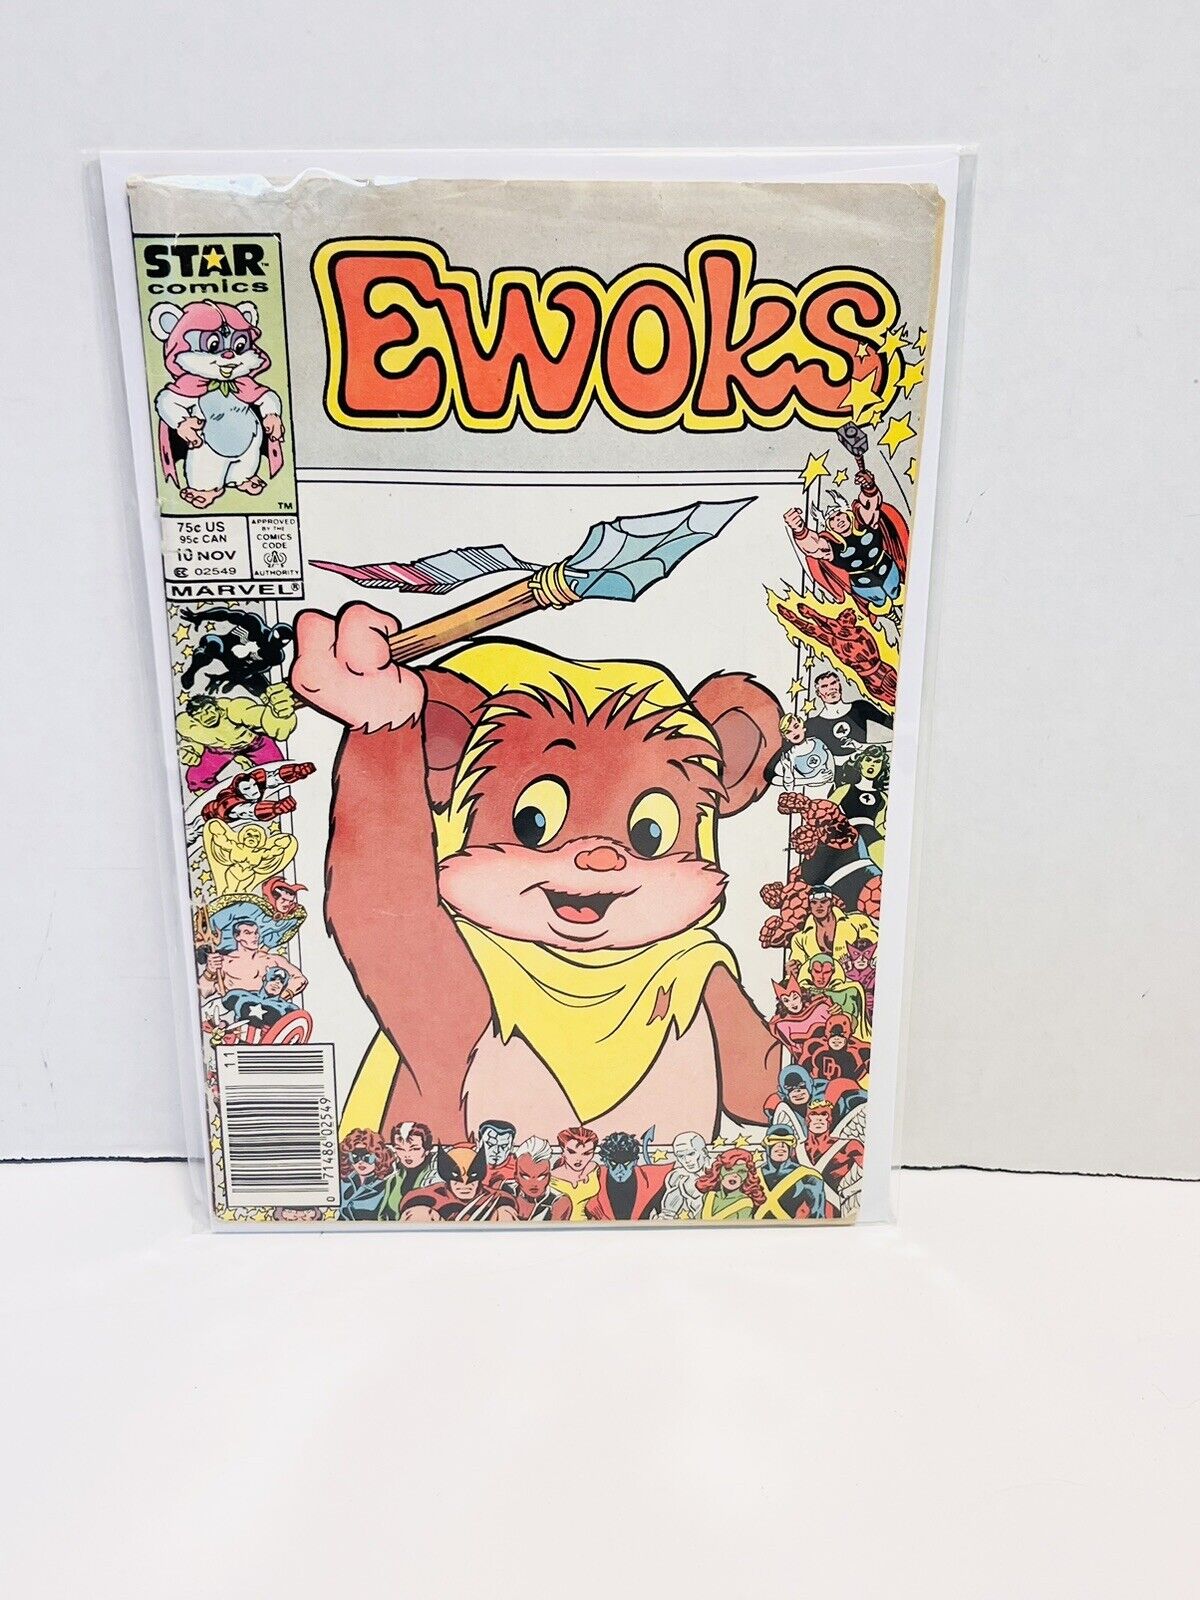 EWOKS # 10 MARVEL STAR COMICS November 1986 NEWSSTAND VARIANT STAR WARS